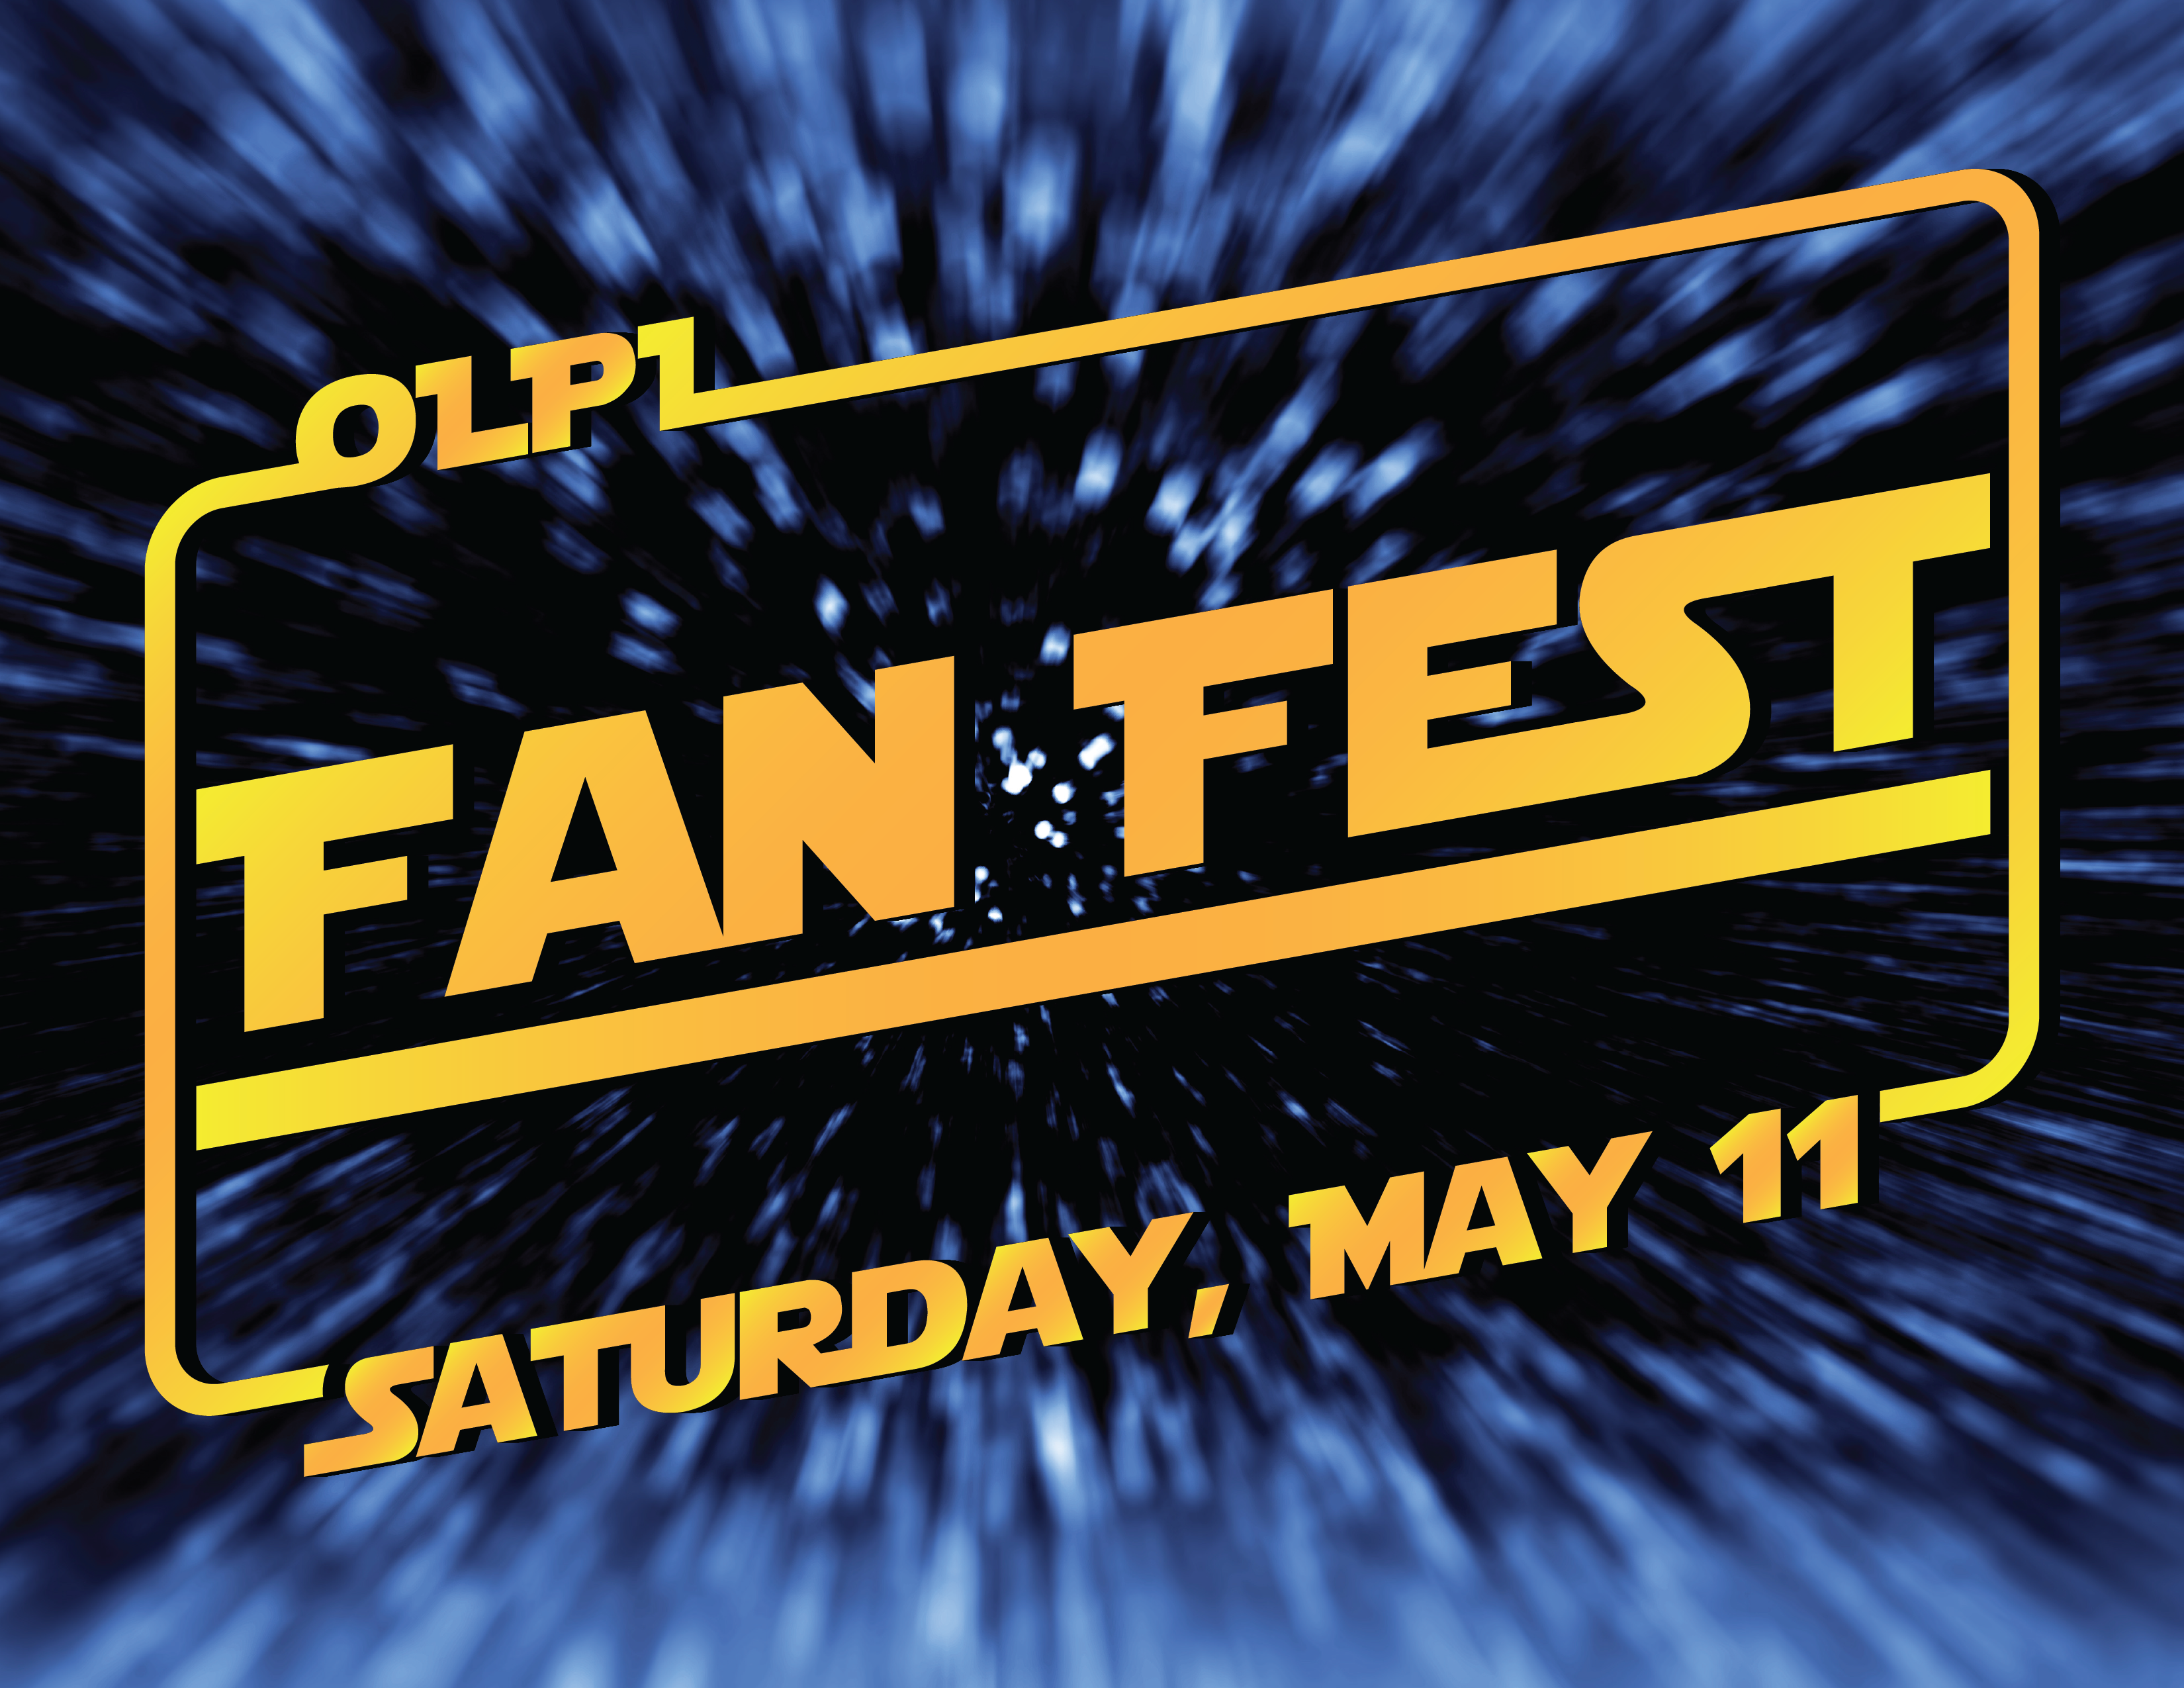 OLPL Fan Fest Saturday May 11